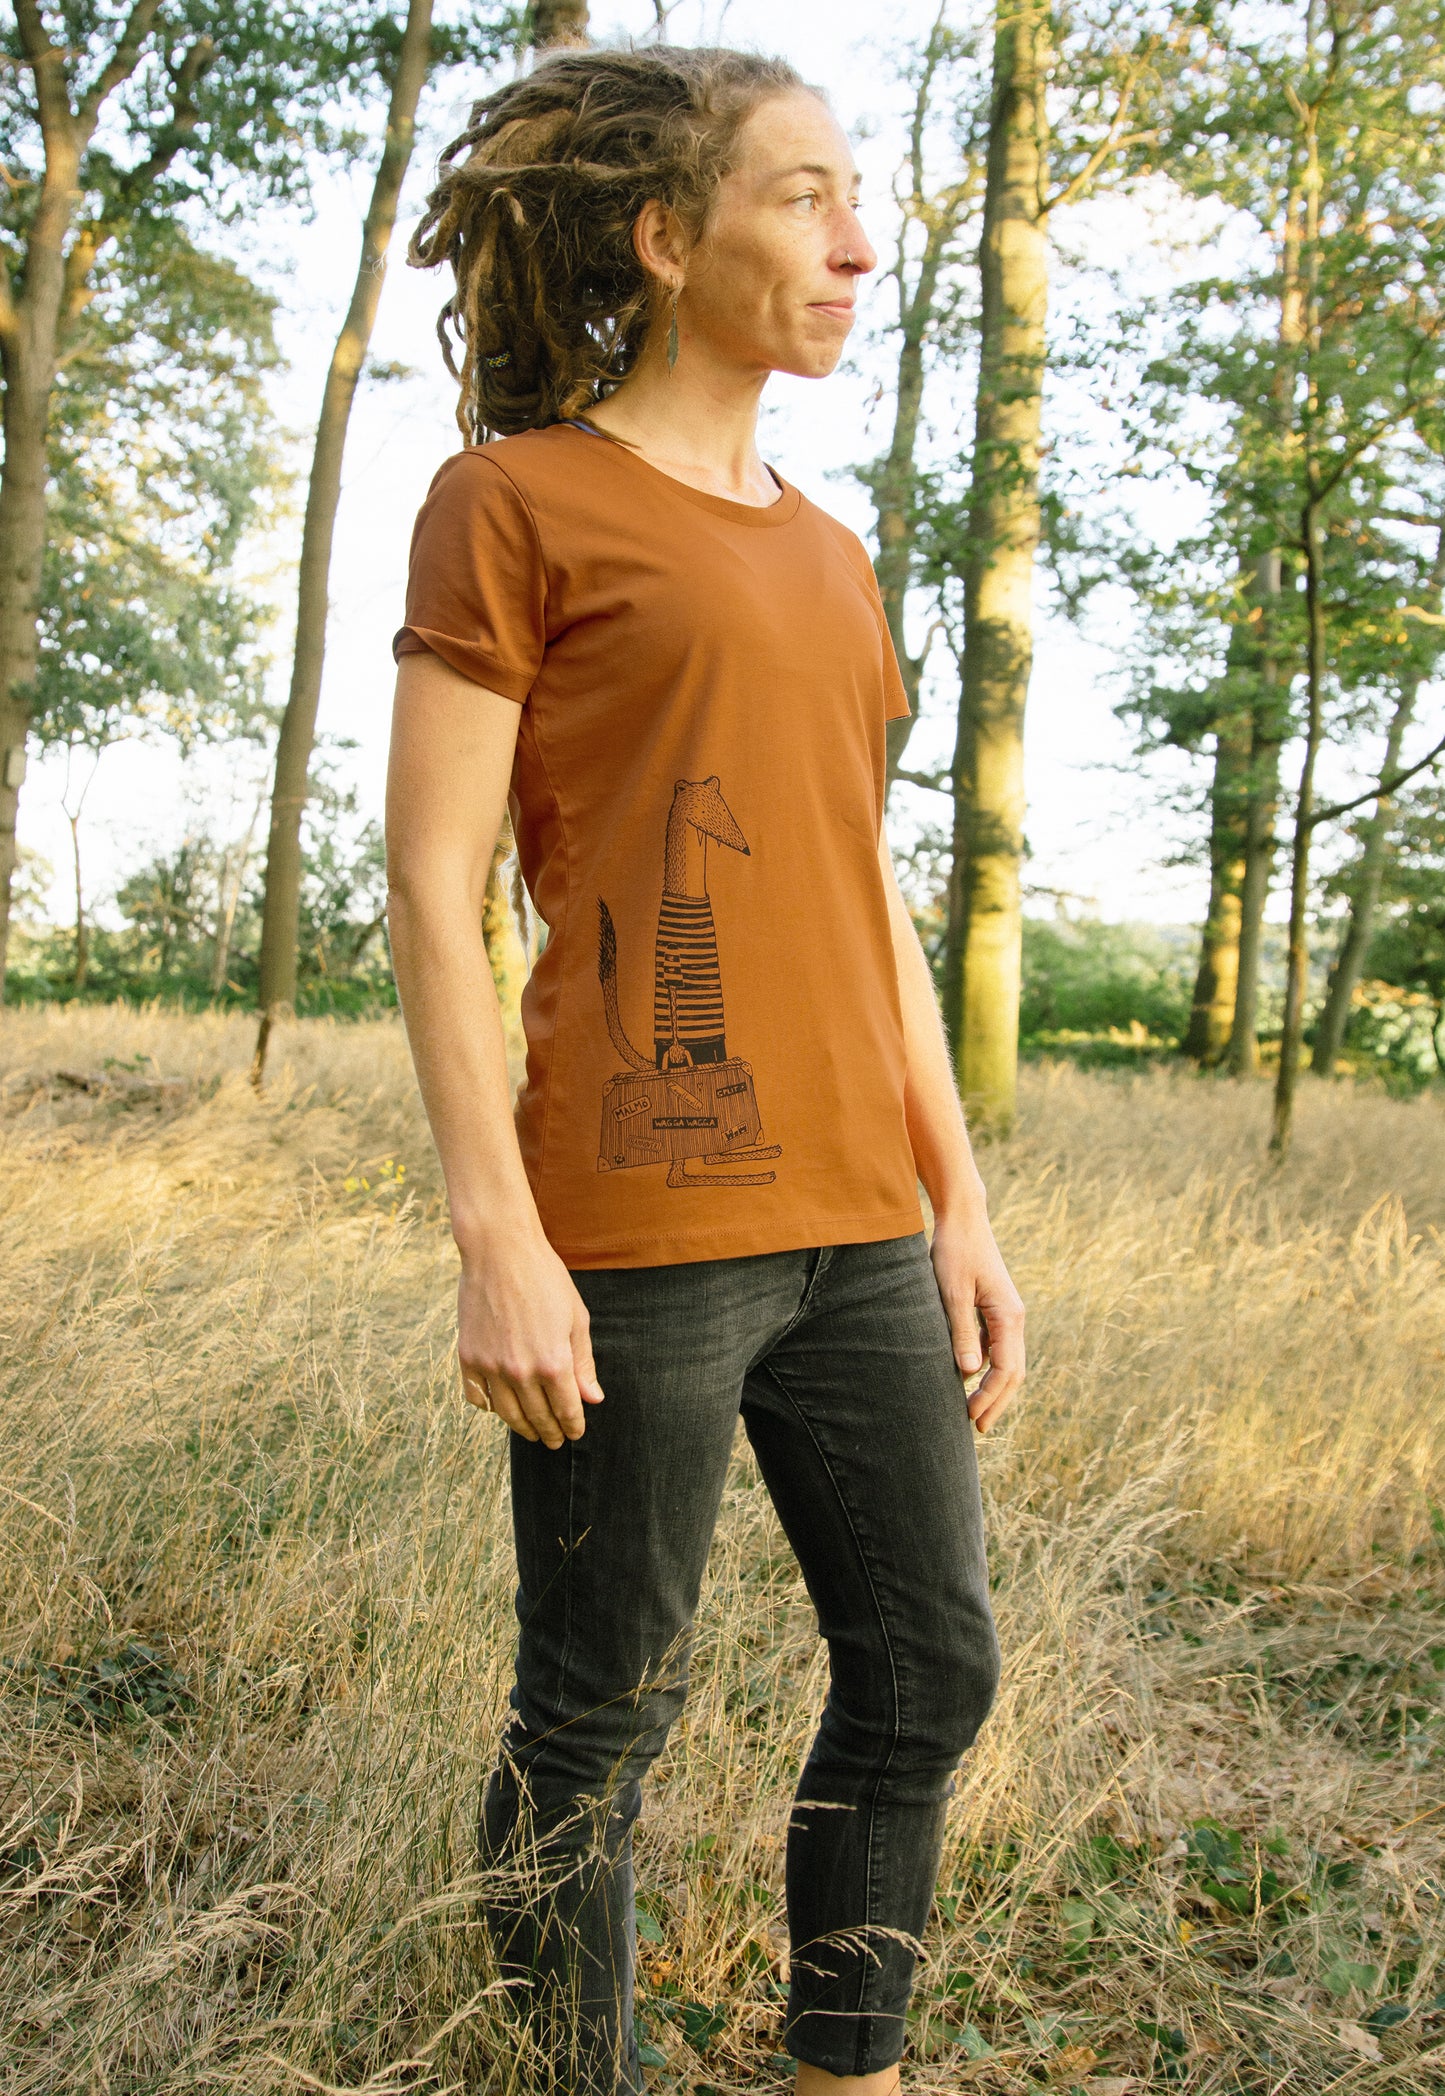 Reisewiesel T-Shirt in roasted orange S-XL